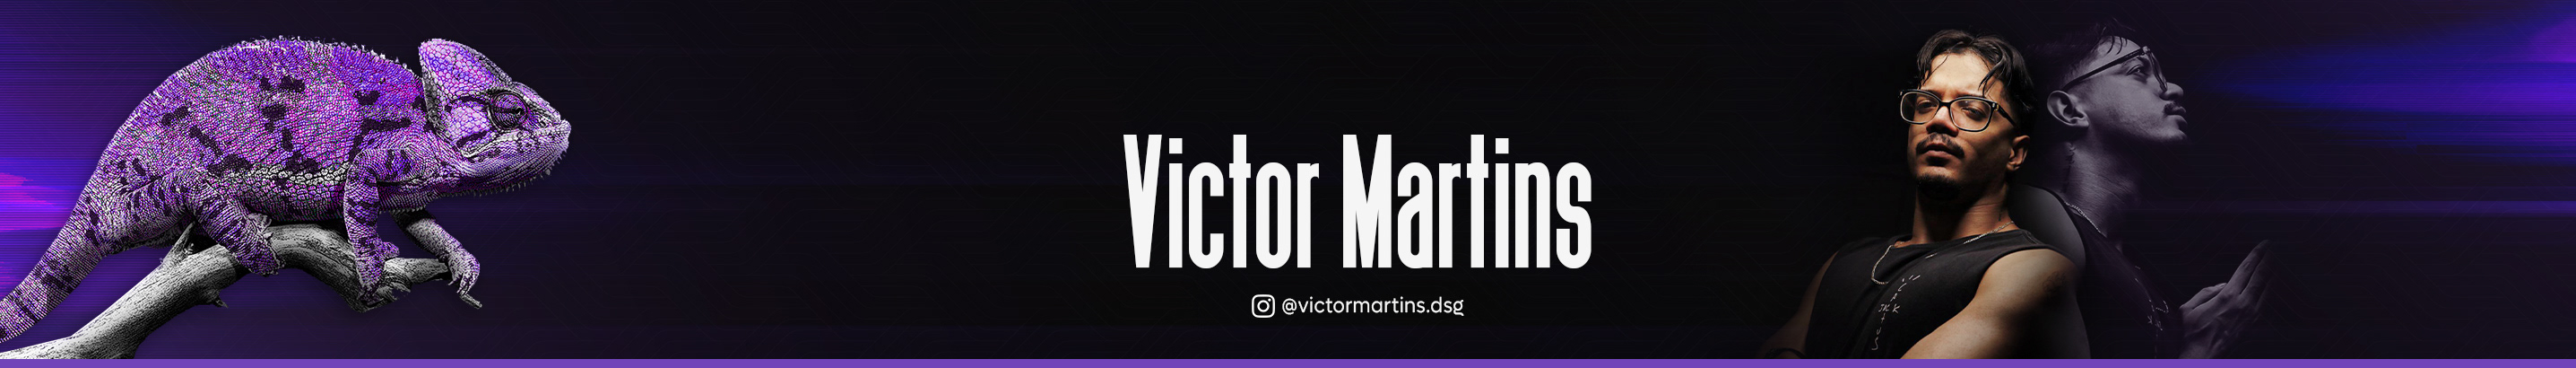 Victor Martins's profile banner